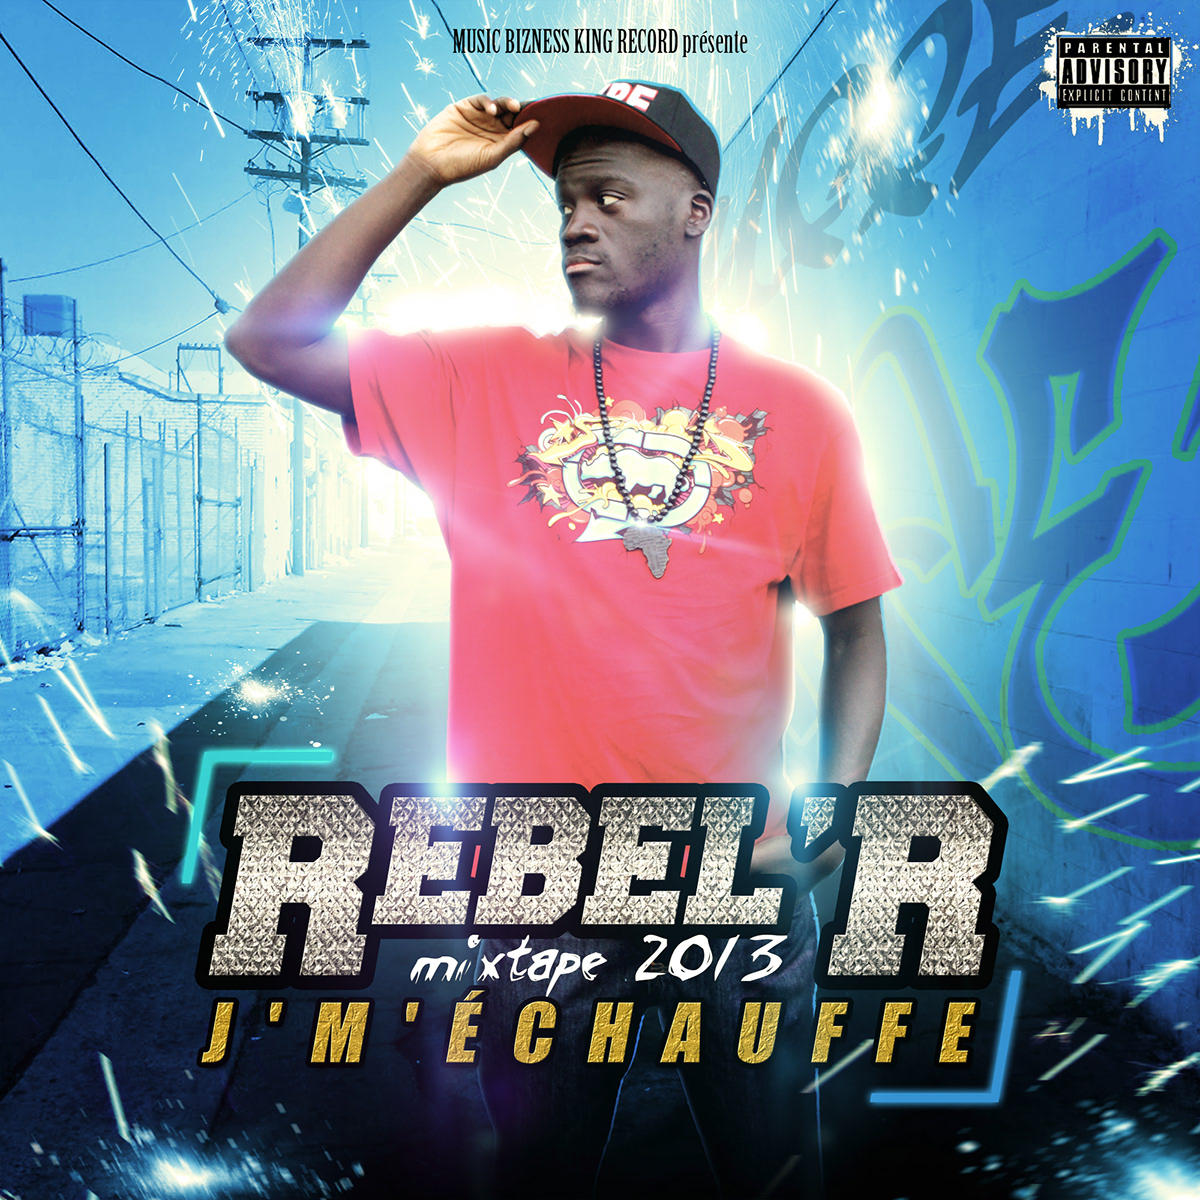 visual-ize design rebel'r mixtape cover cd hip hop Urban French rap new school artist